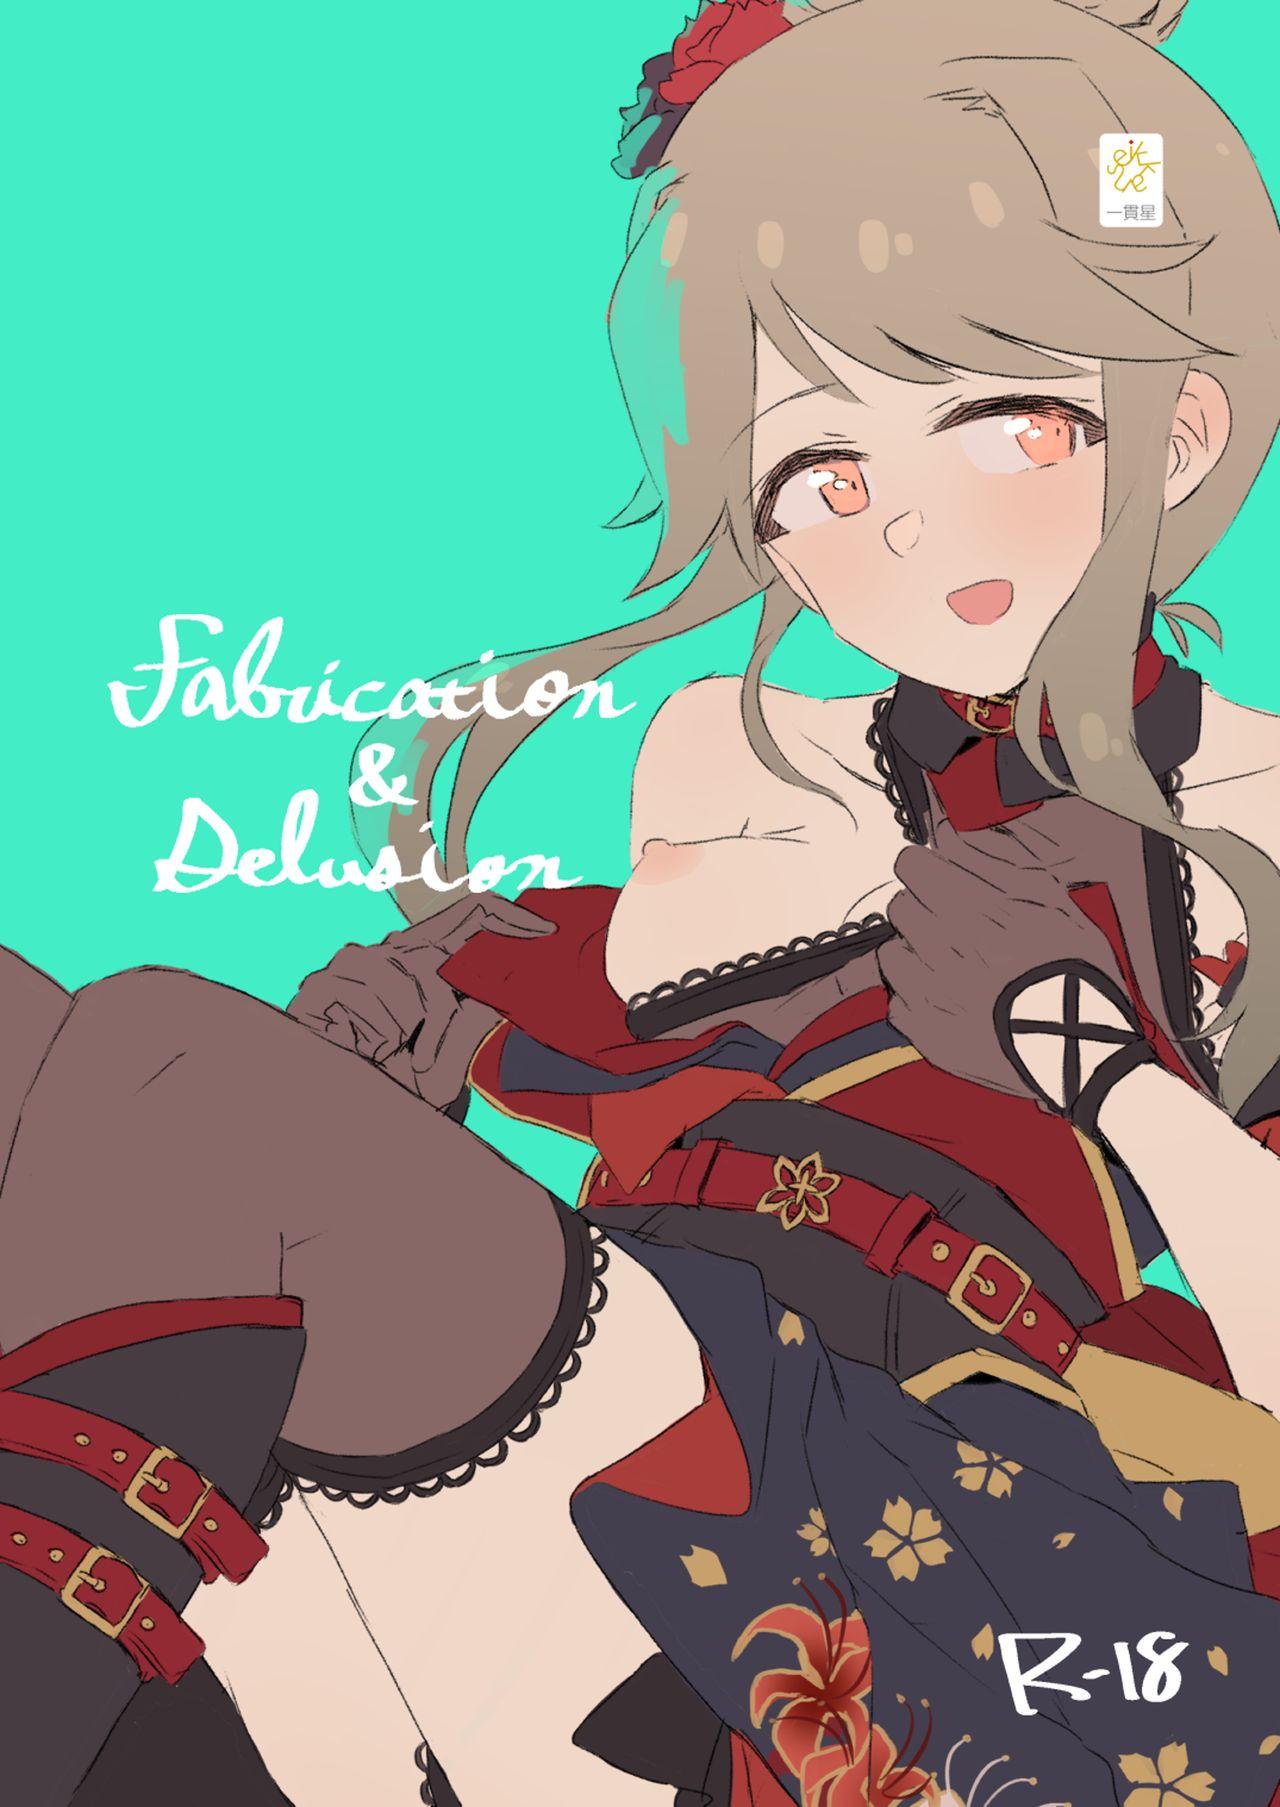 Fabrication&Delusion 0